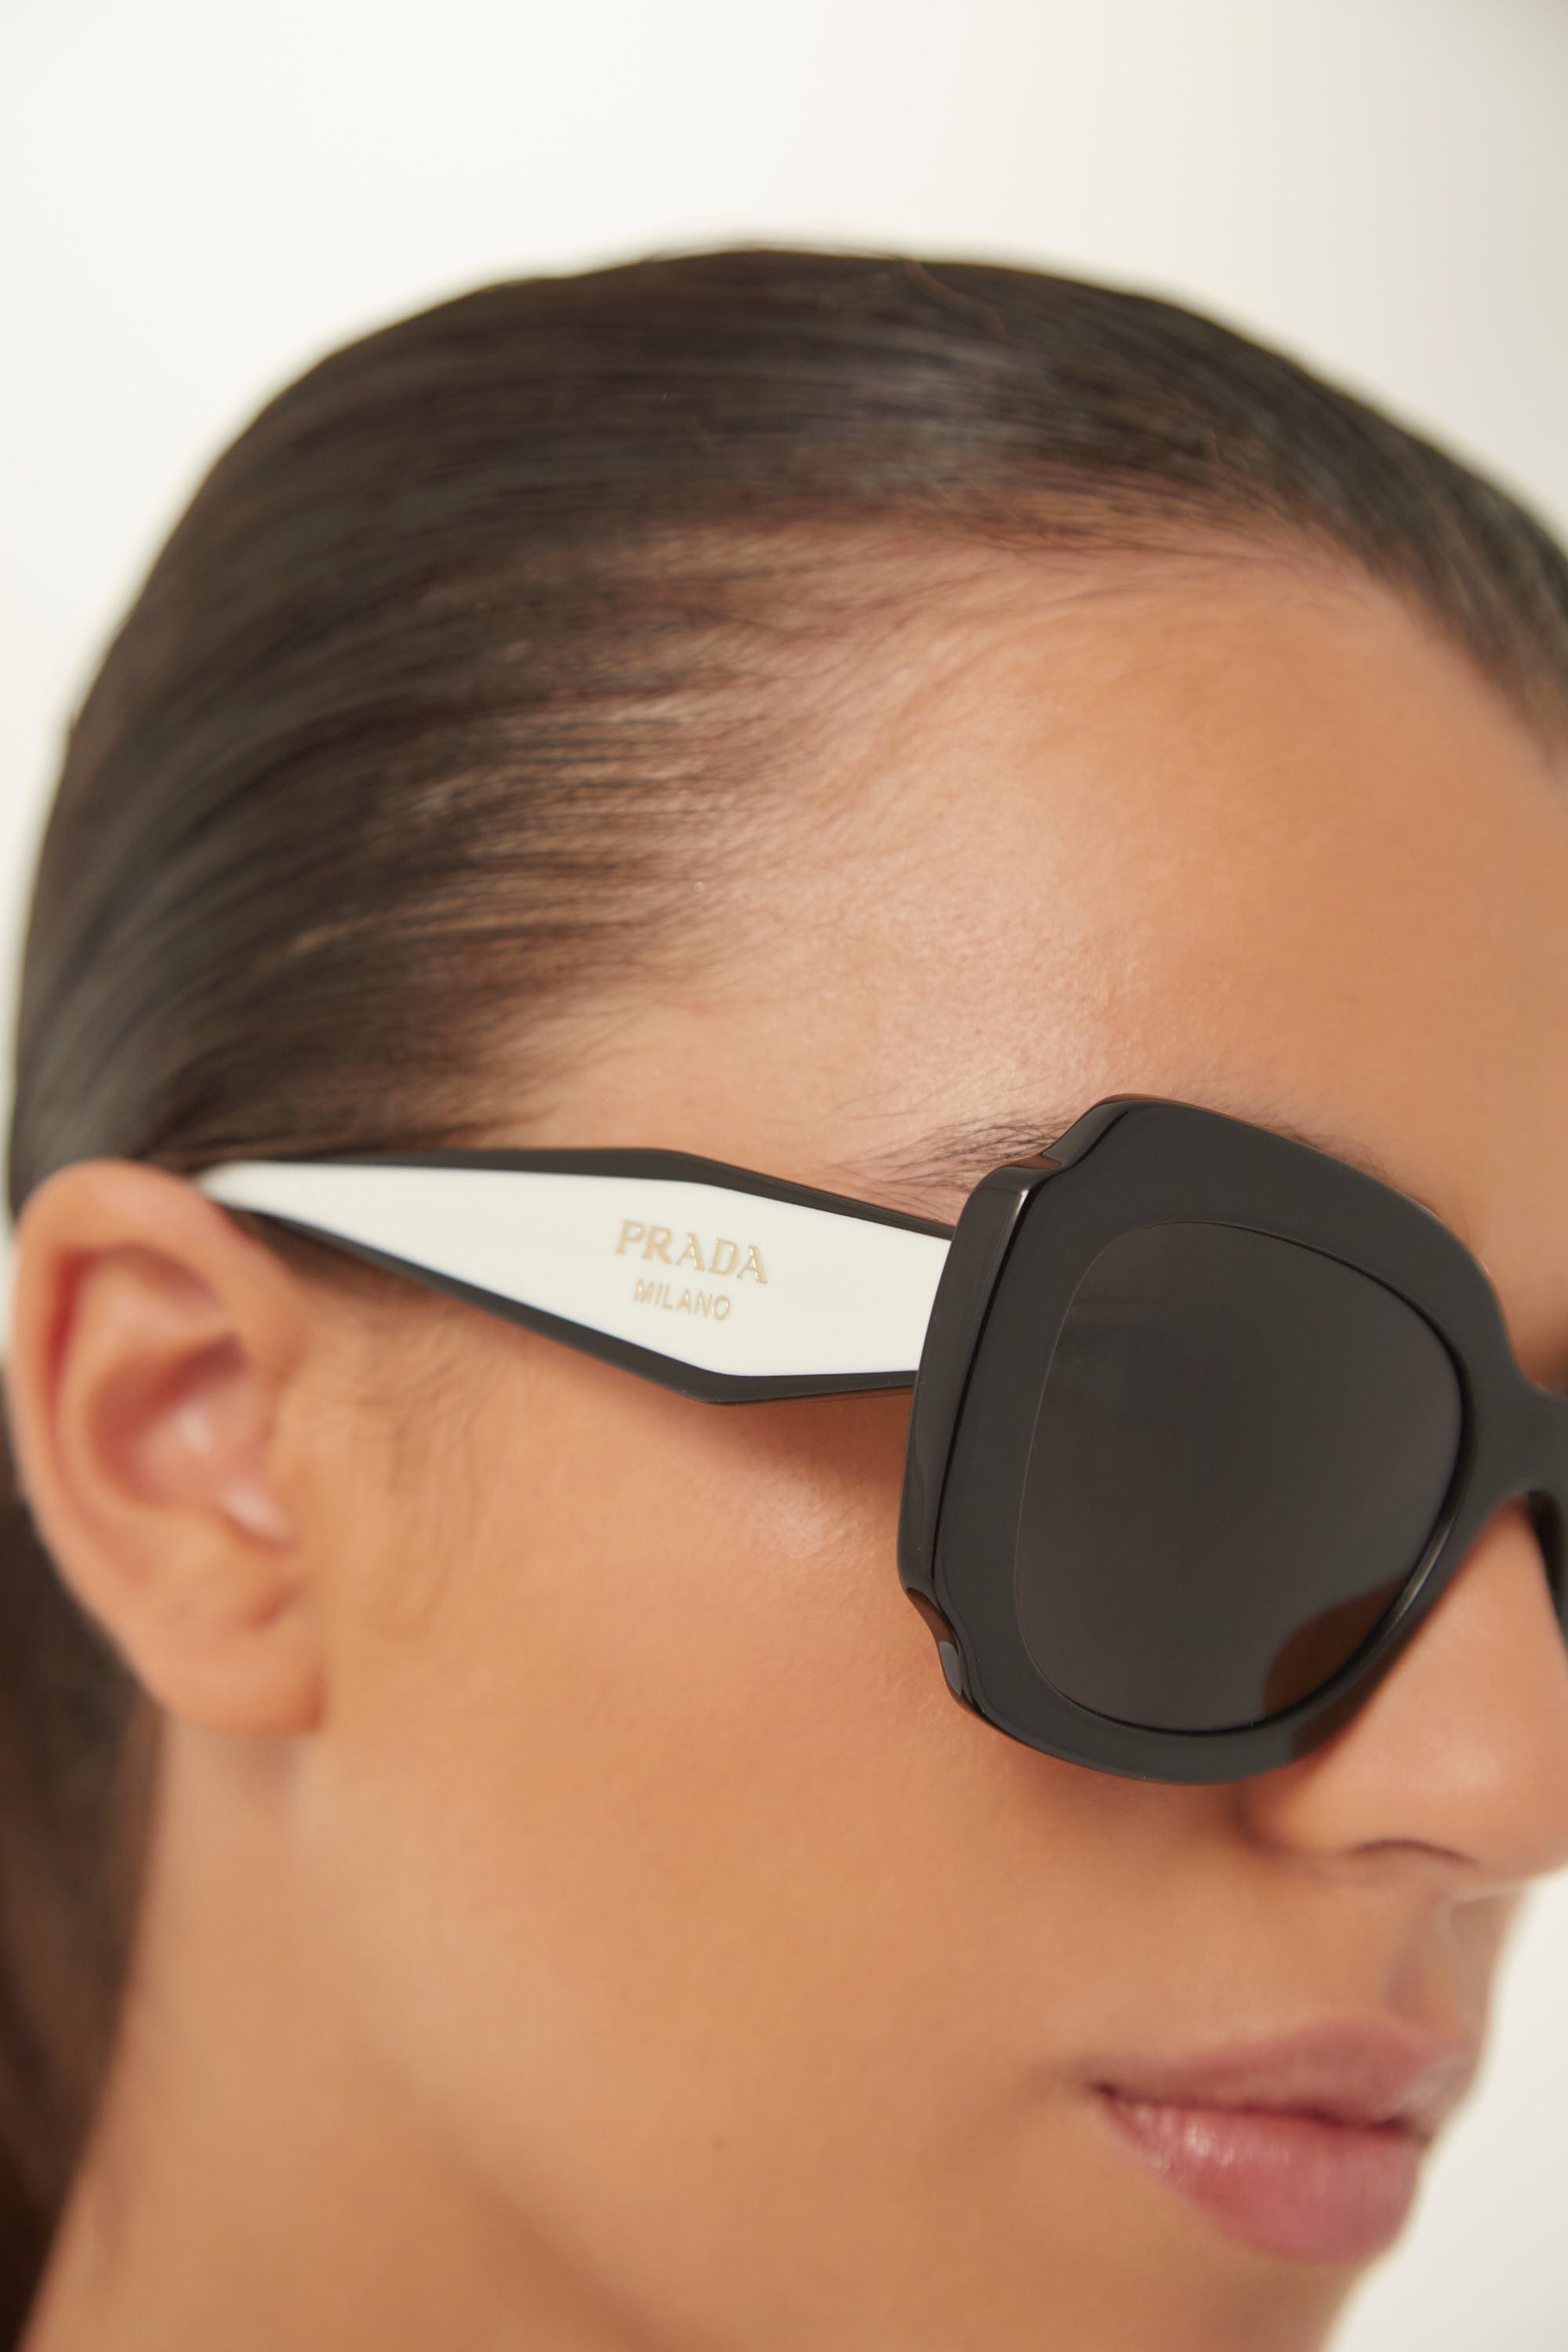 Prada butterfly black and white sunglasses - Eyewear Club